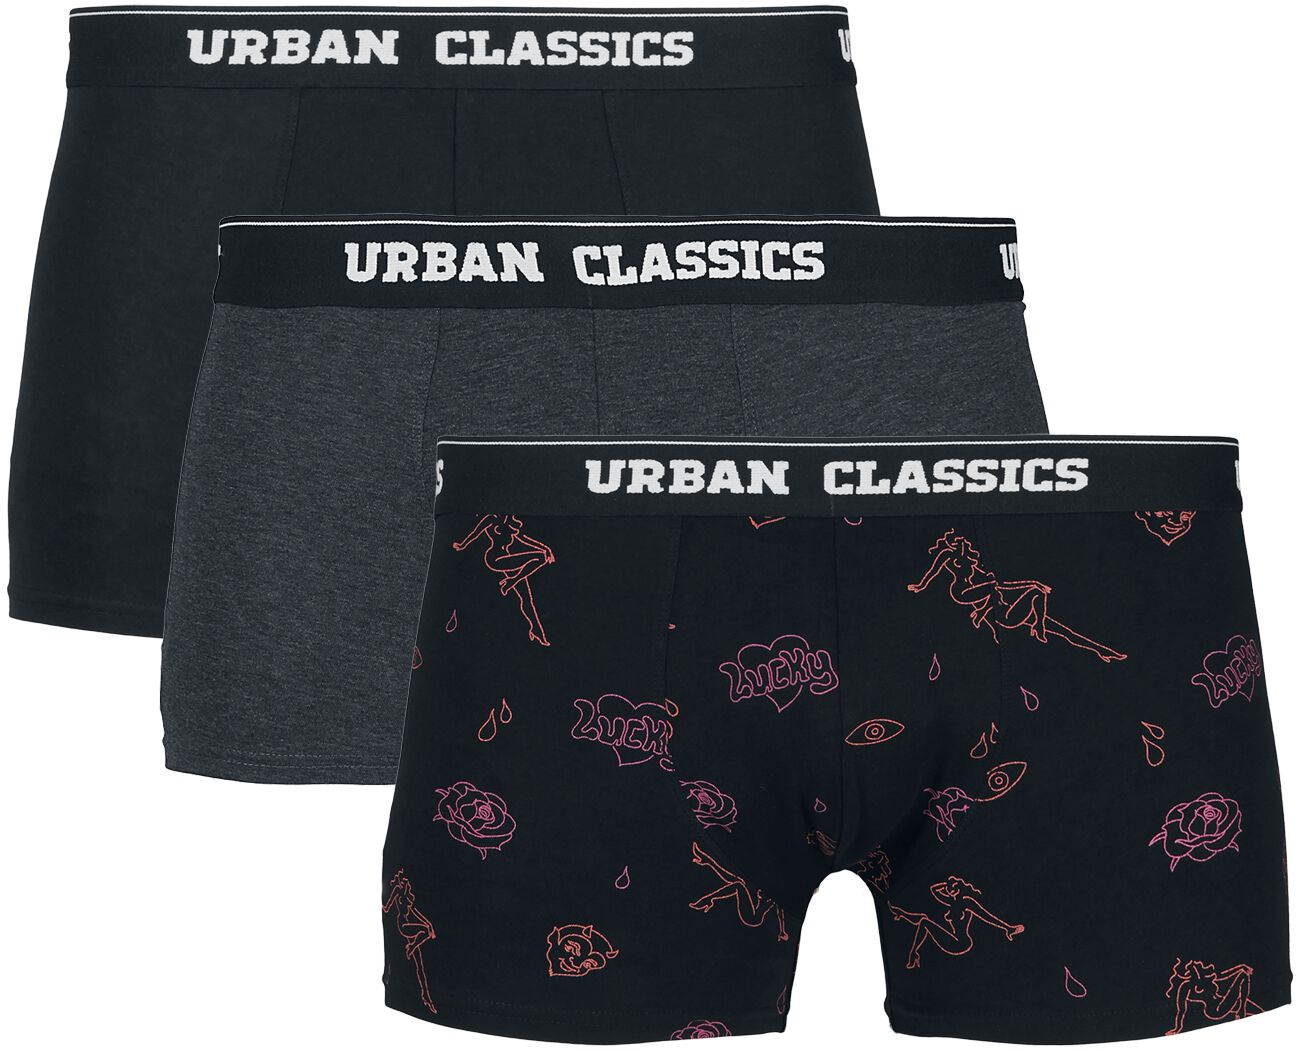 Urban Classics Boxer Shorts 3-Pack Boxers Set black grey